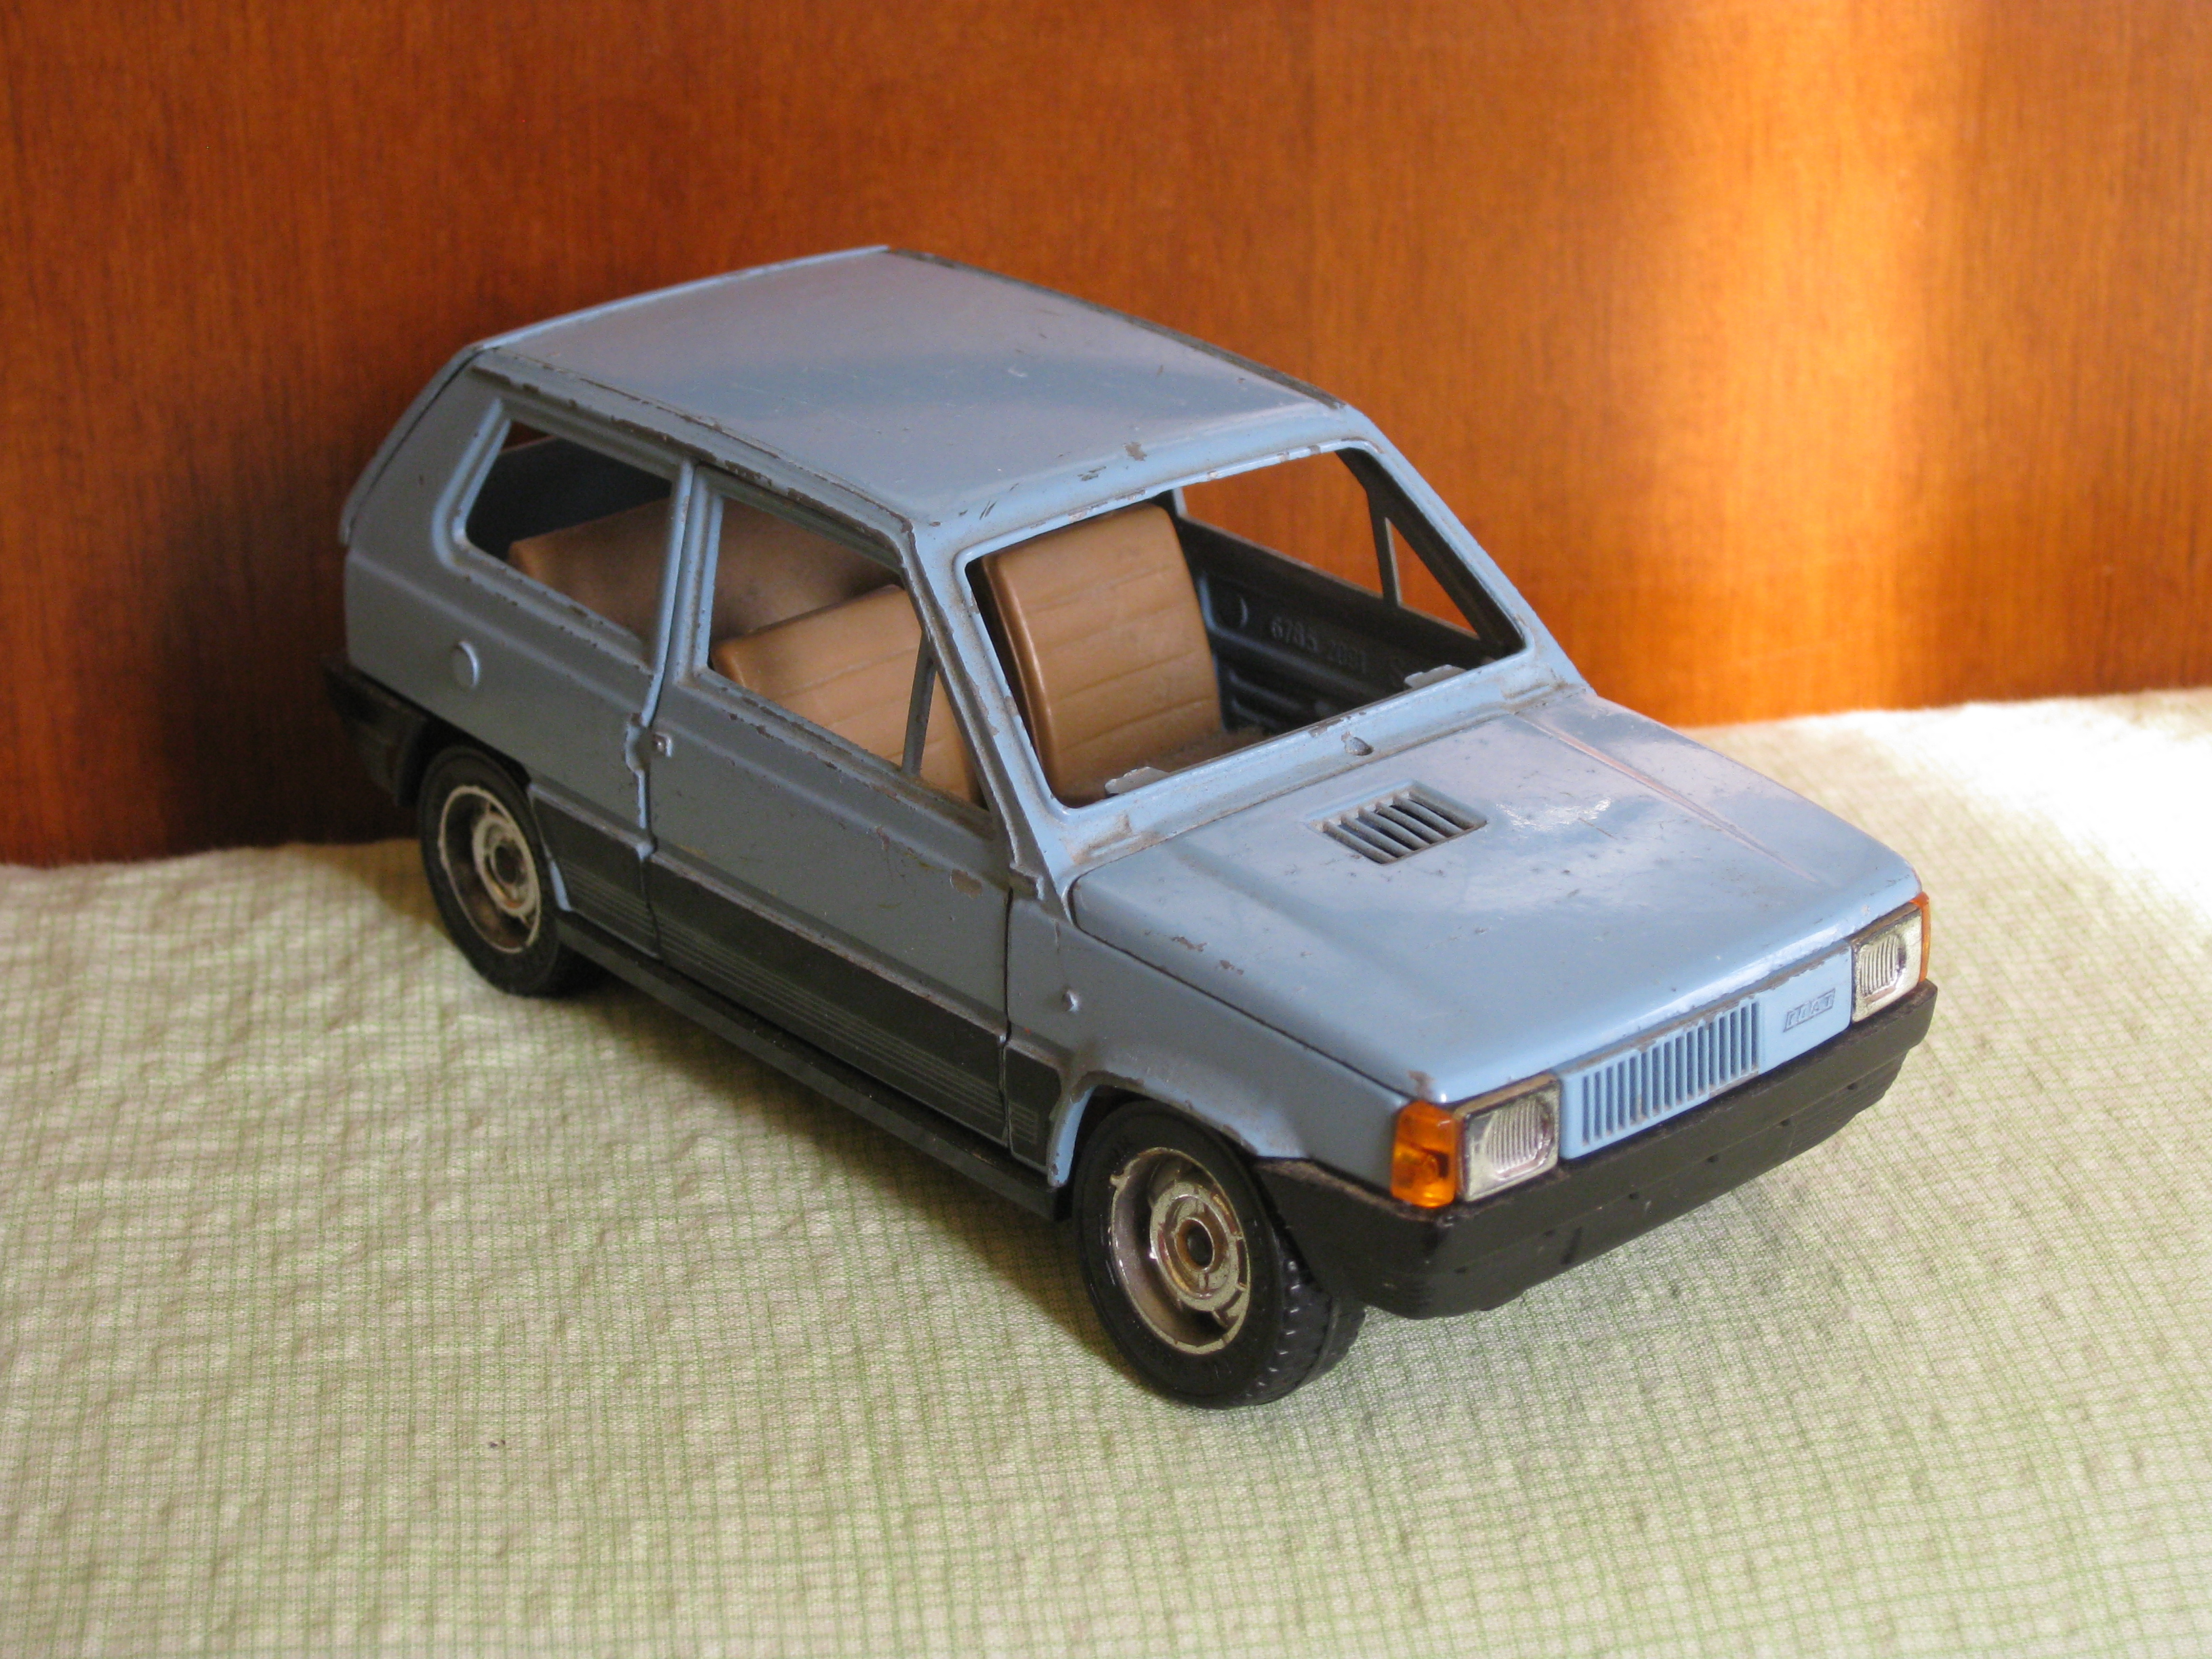 Le mini vetture del mini garage di Cars. Ehodaqx1